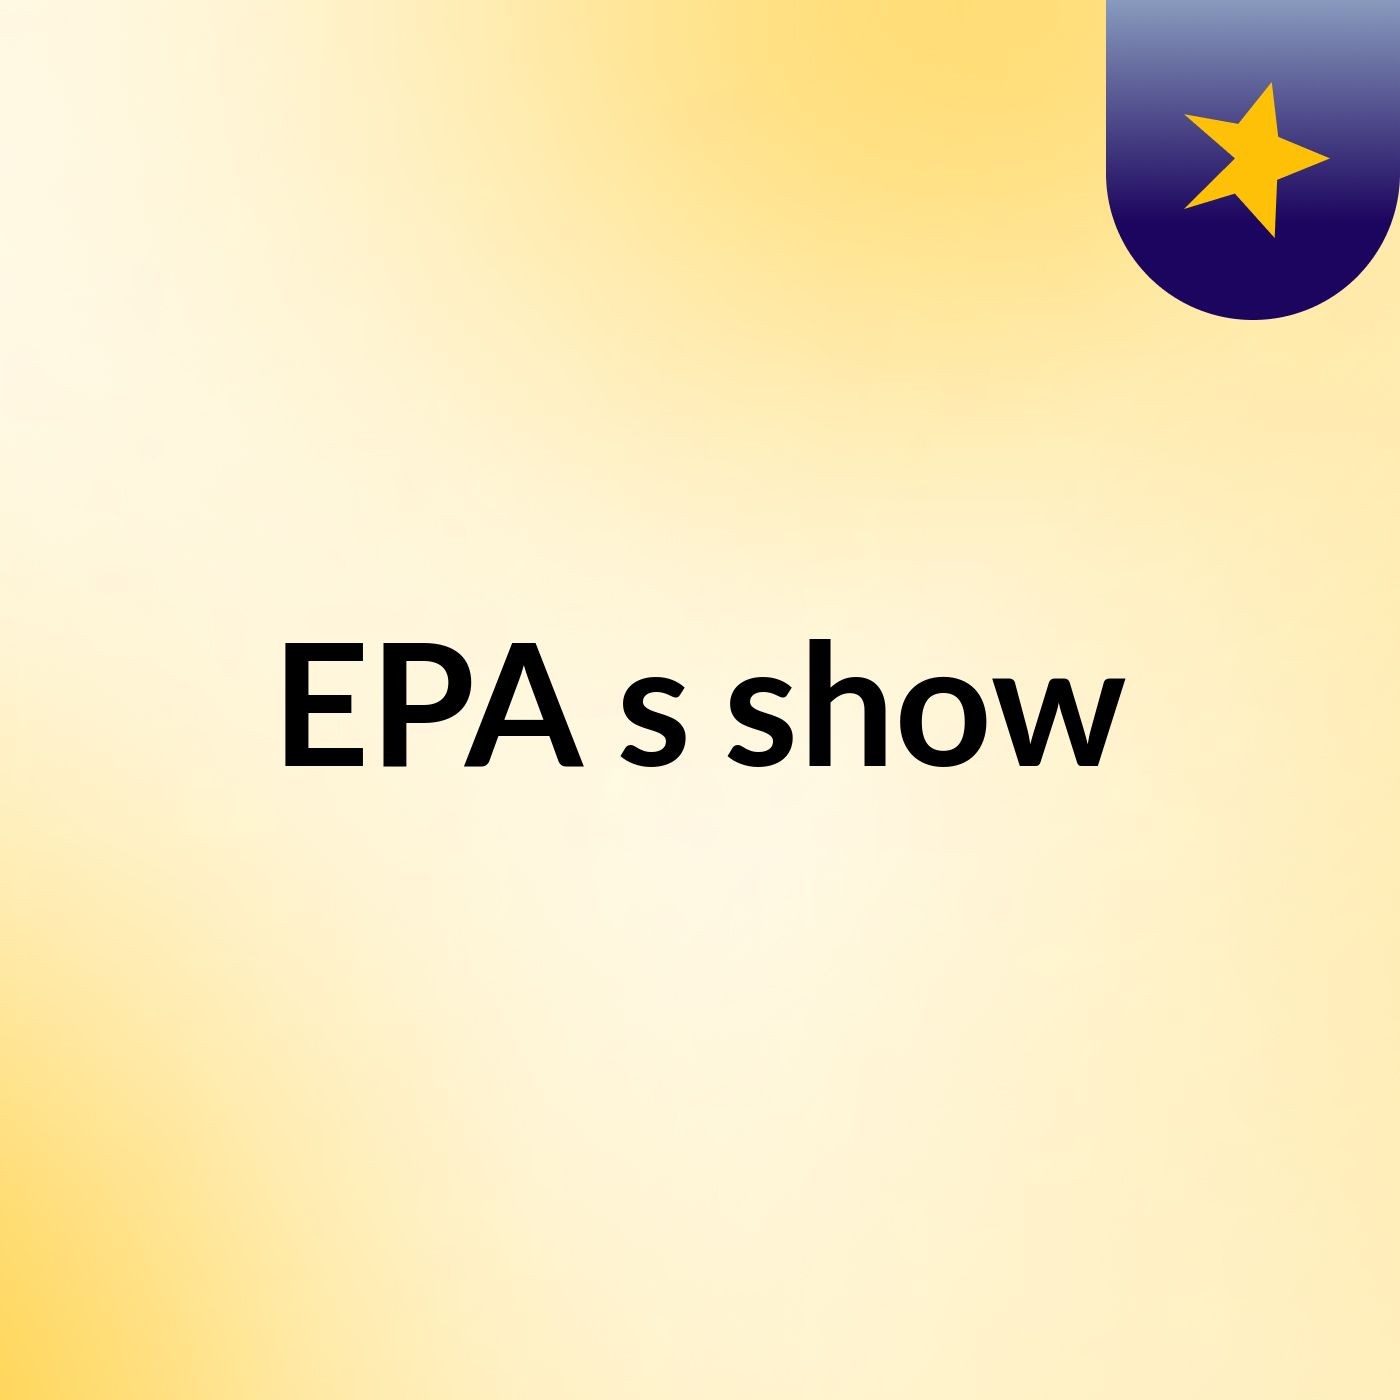 EPA's show